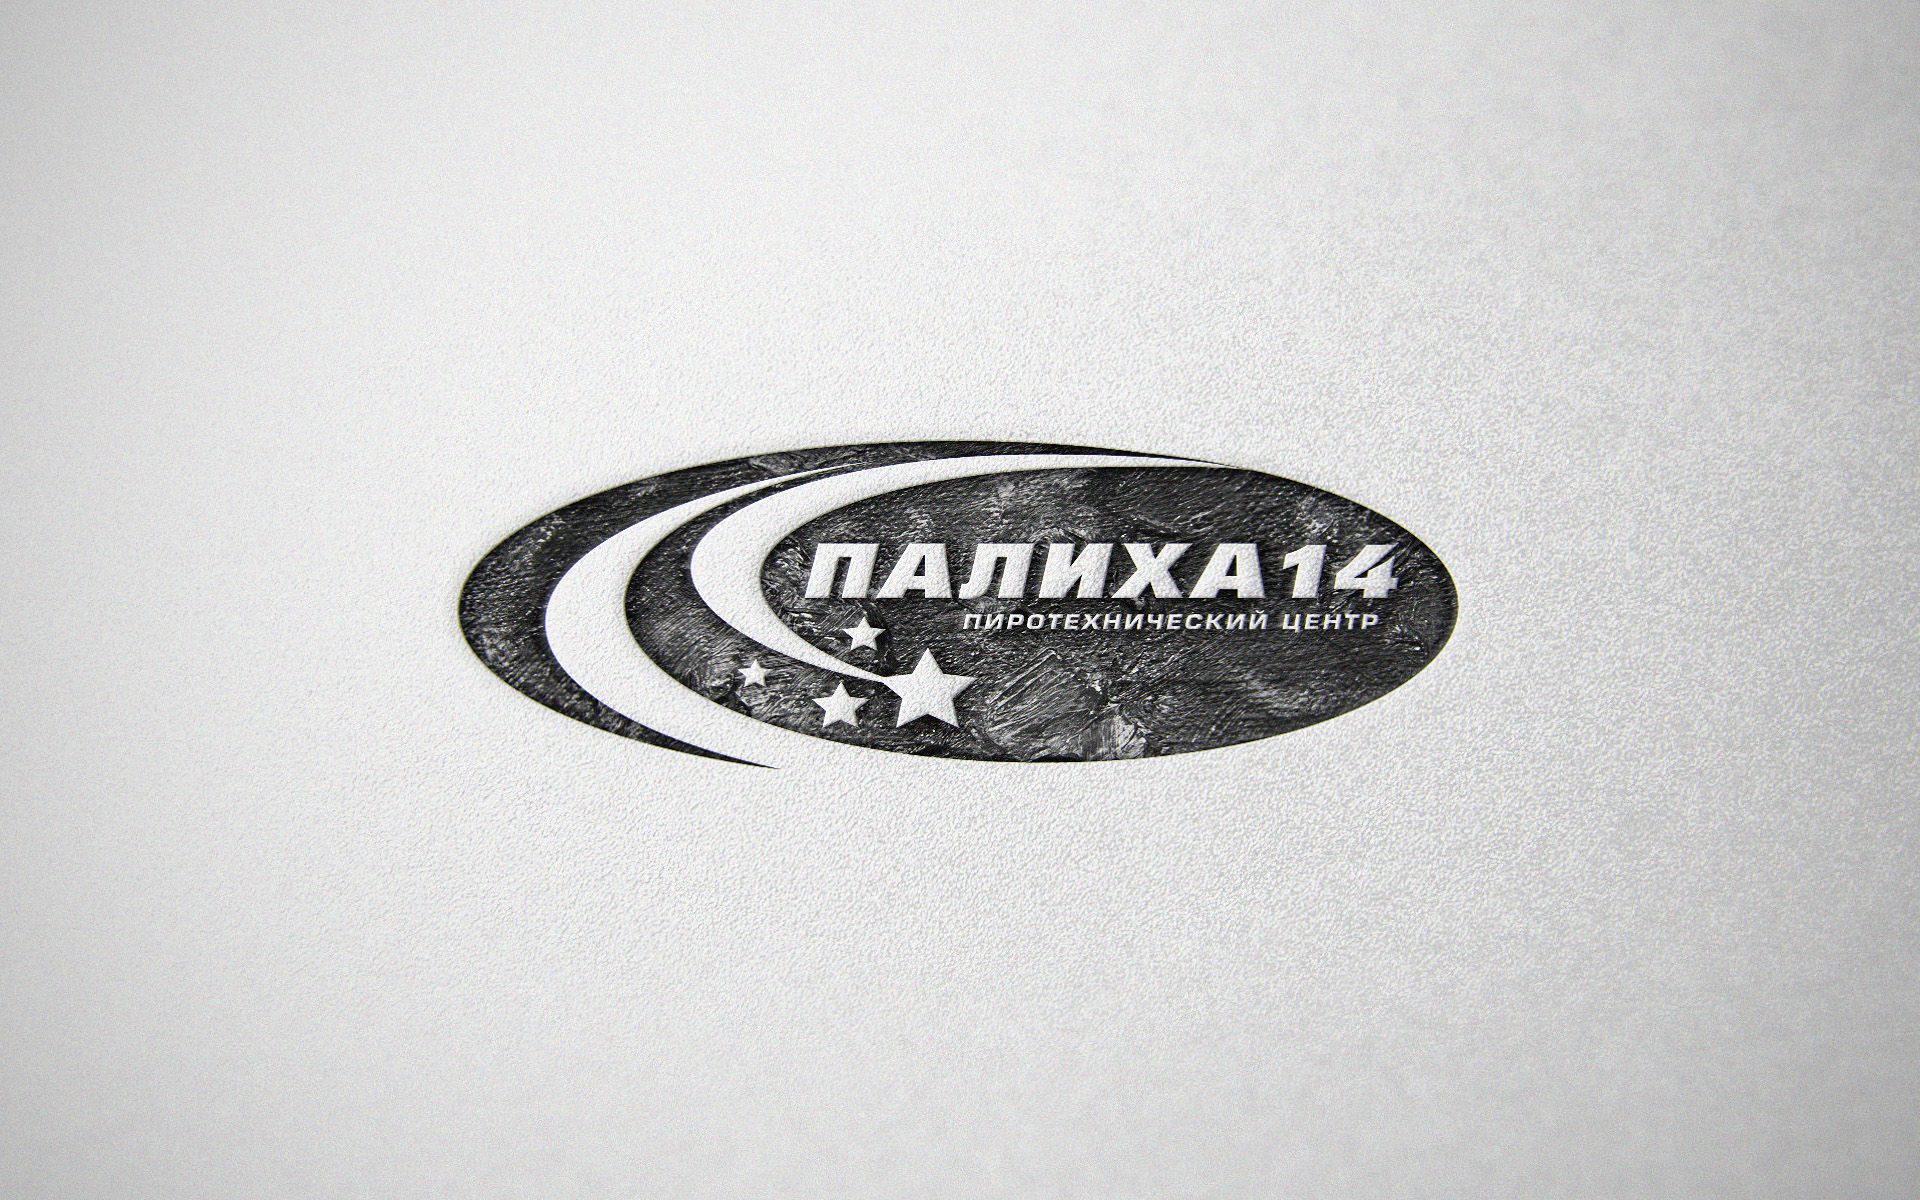 Логотип для пиротехнического центра - дизайнер U4po4mak